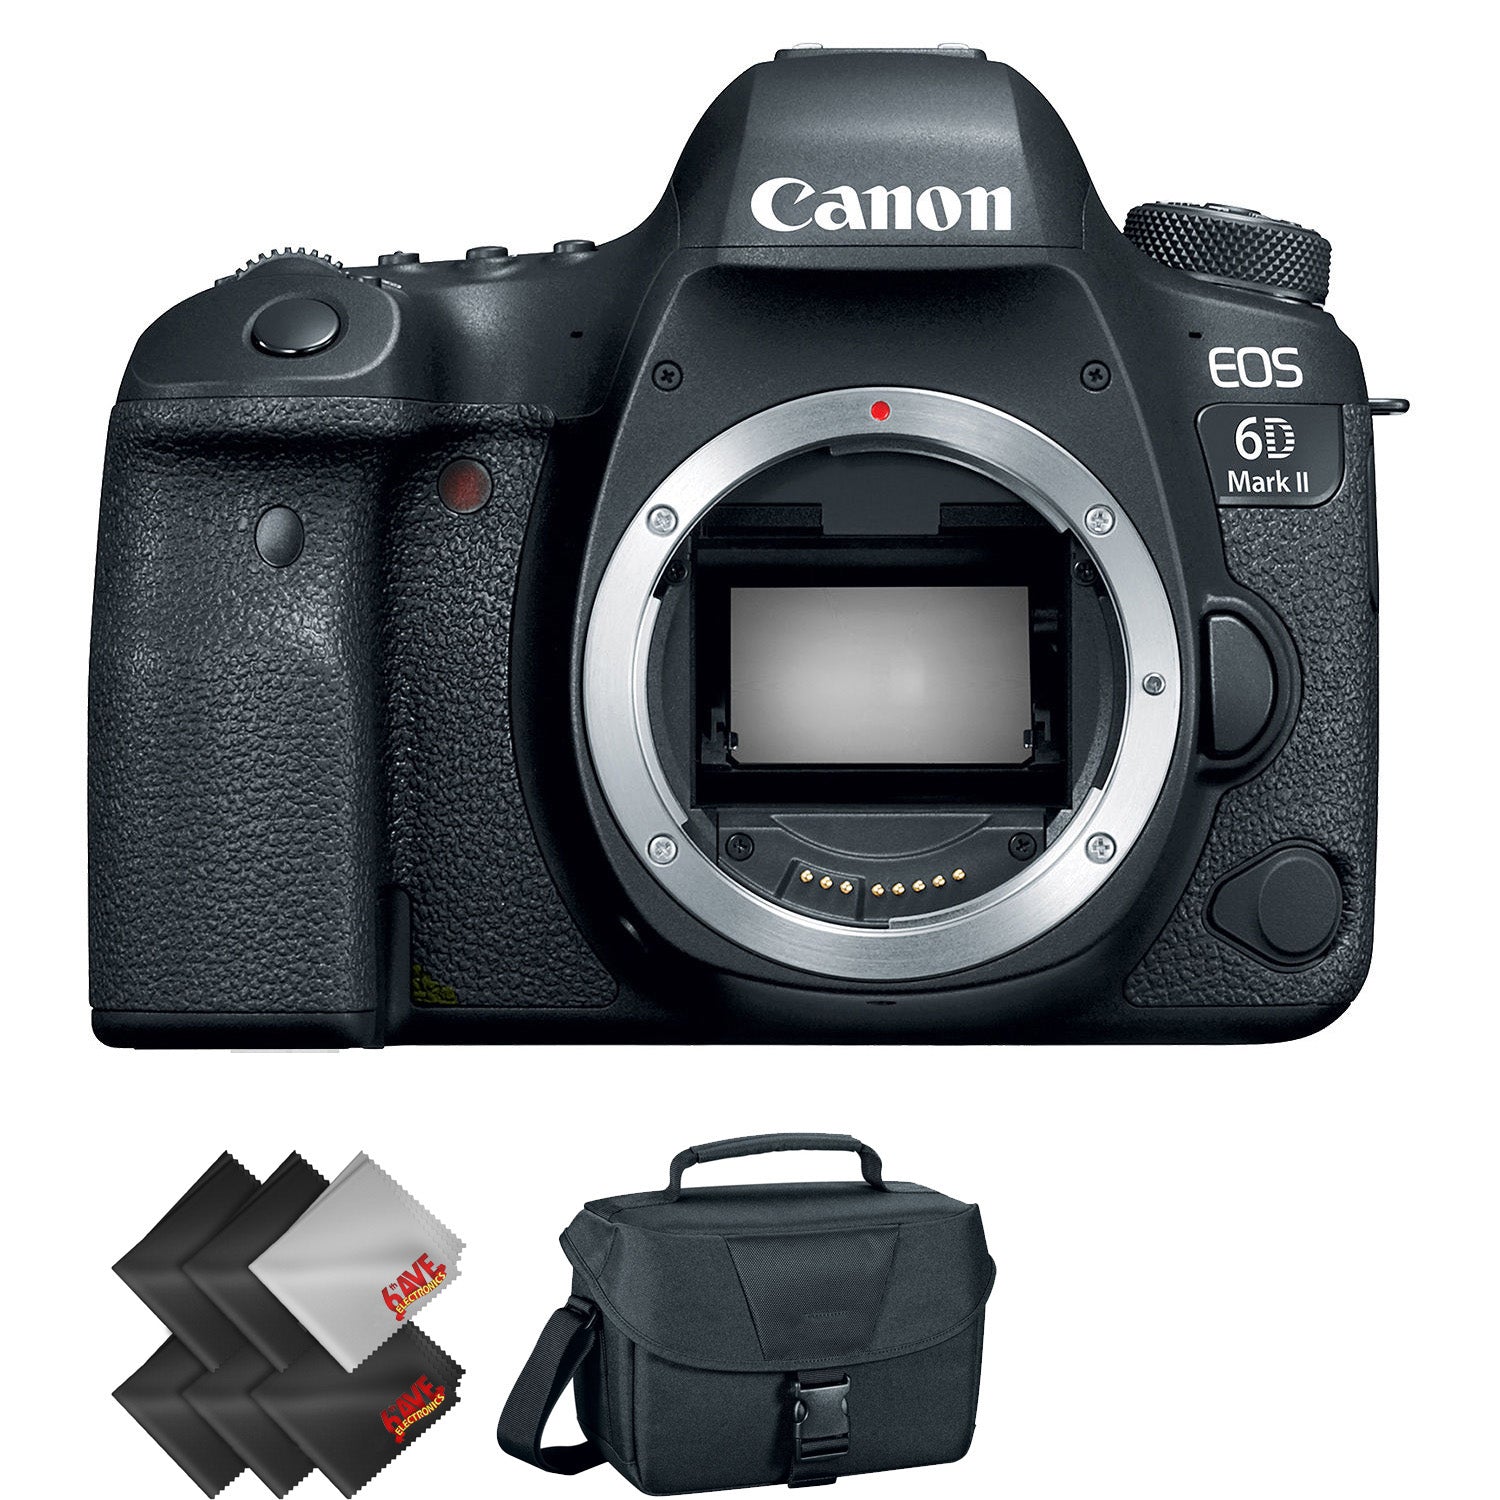 Canon EOS 6D Mark II DSLR Camera (Body Only) + 2 Year Accidental Warranty Advanced Bundle